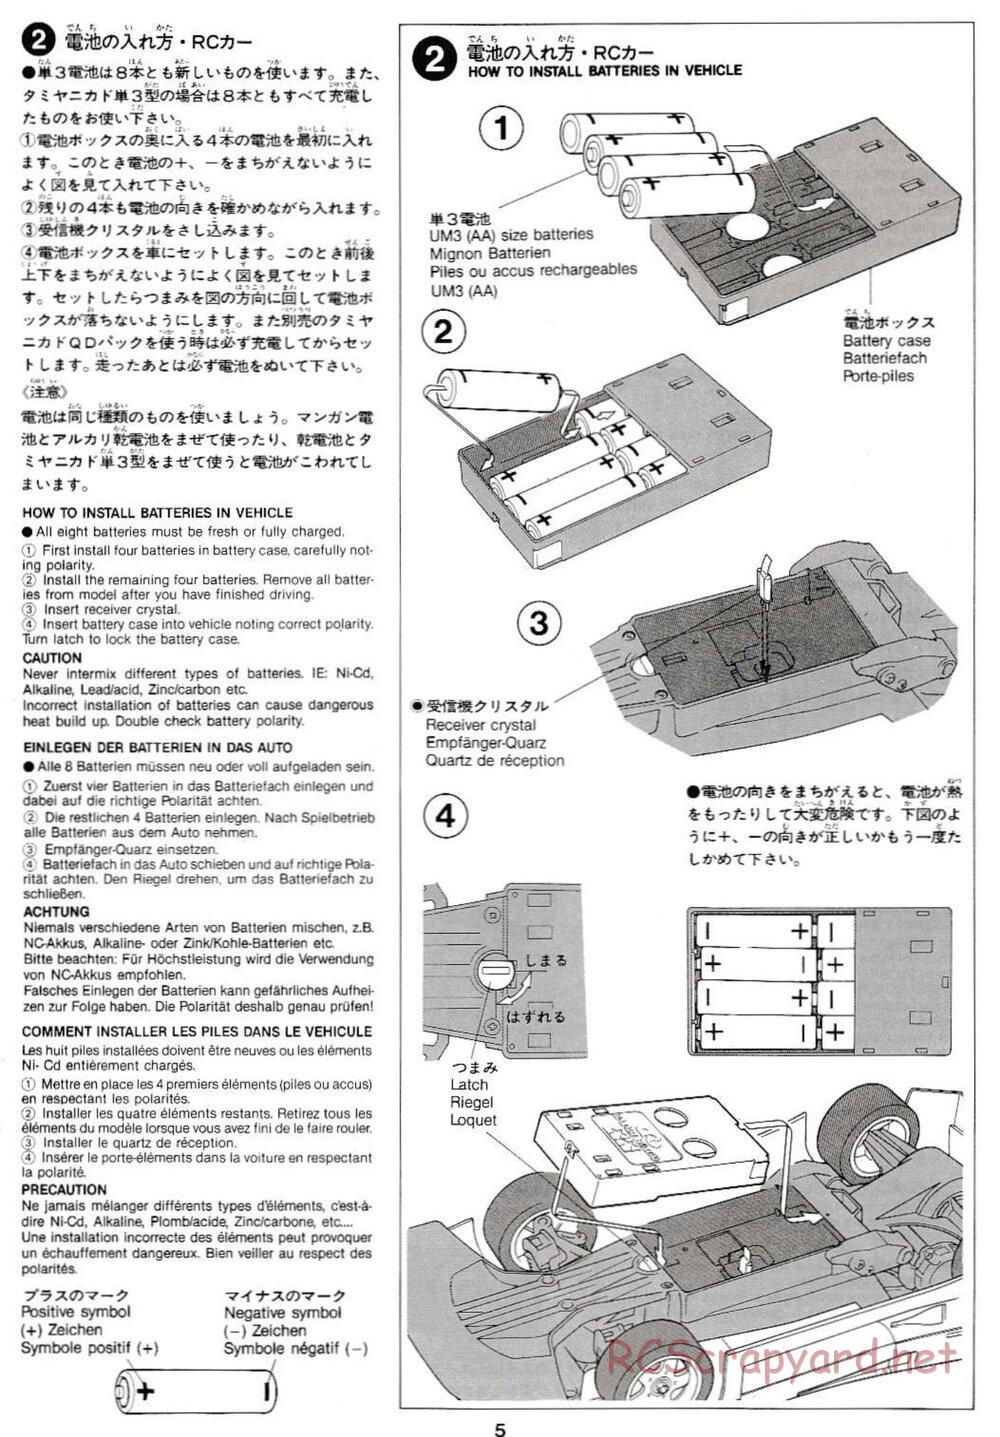 Tamiya - Ferrari F40 QD Chassis - Manual - Page 5